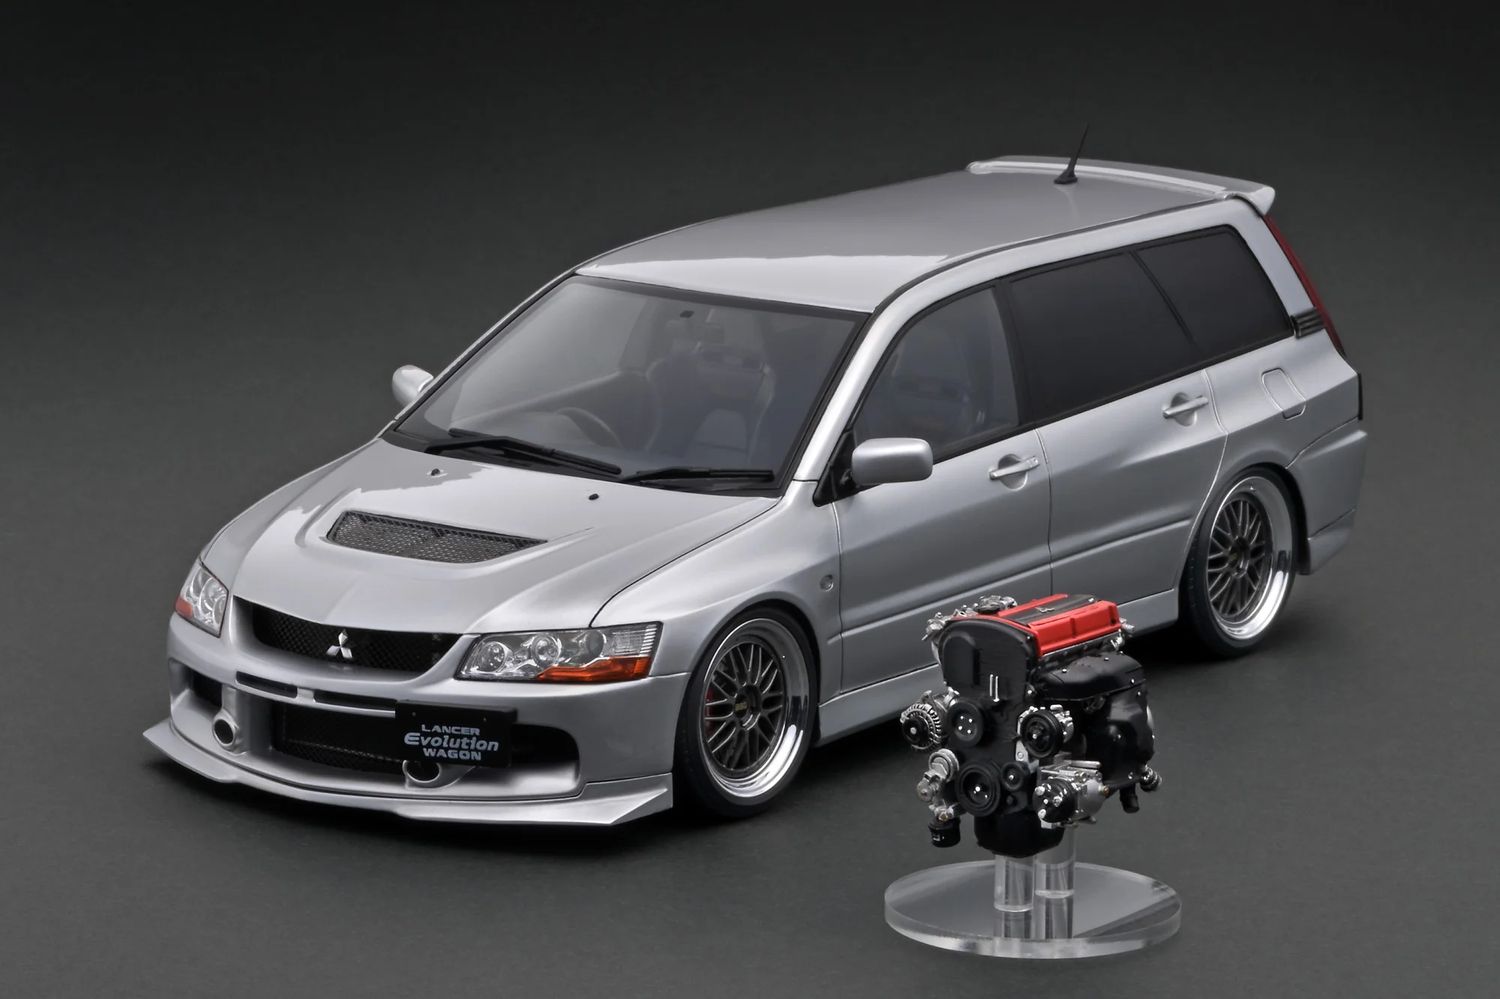 1:18 Ignition - Mitsubishi Lancer Evolution Wagon (CT9W) with 4G63 engine, silver